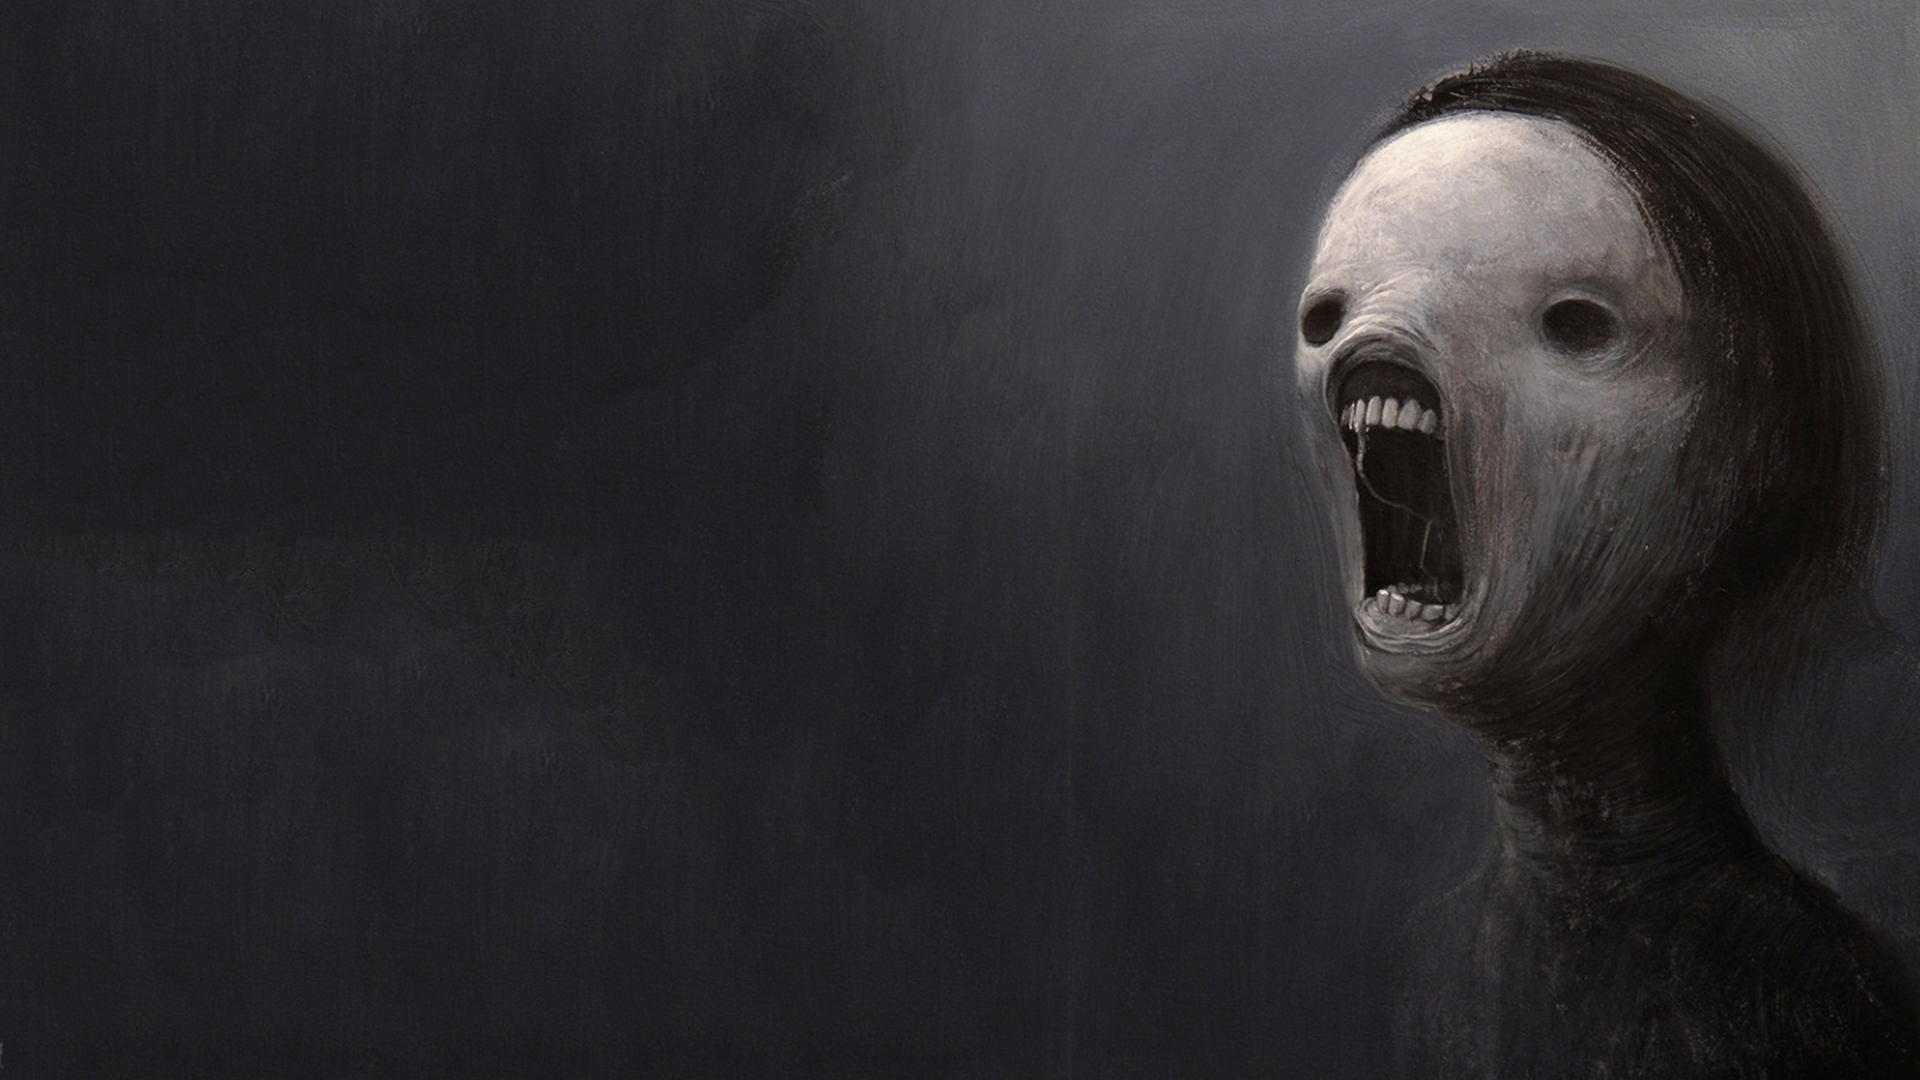 General 1920x1080 scary face depressing dark teeth creepy digital art low light simple background